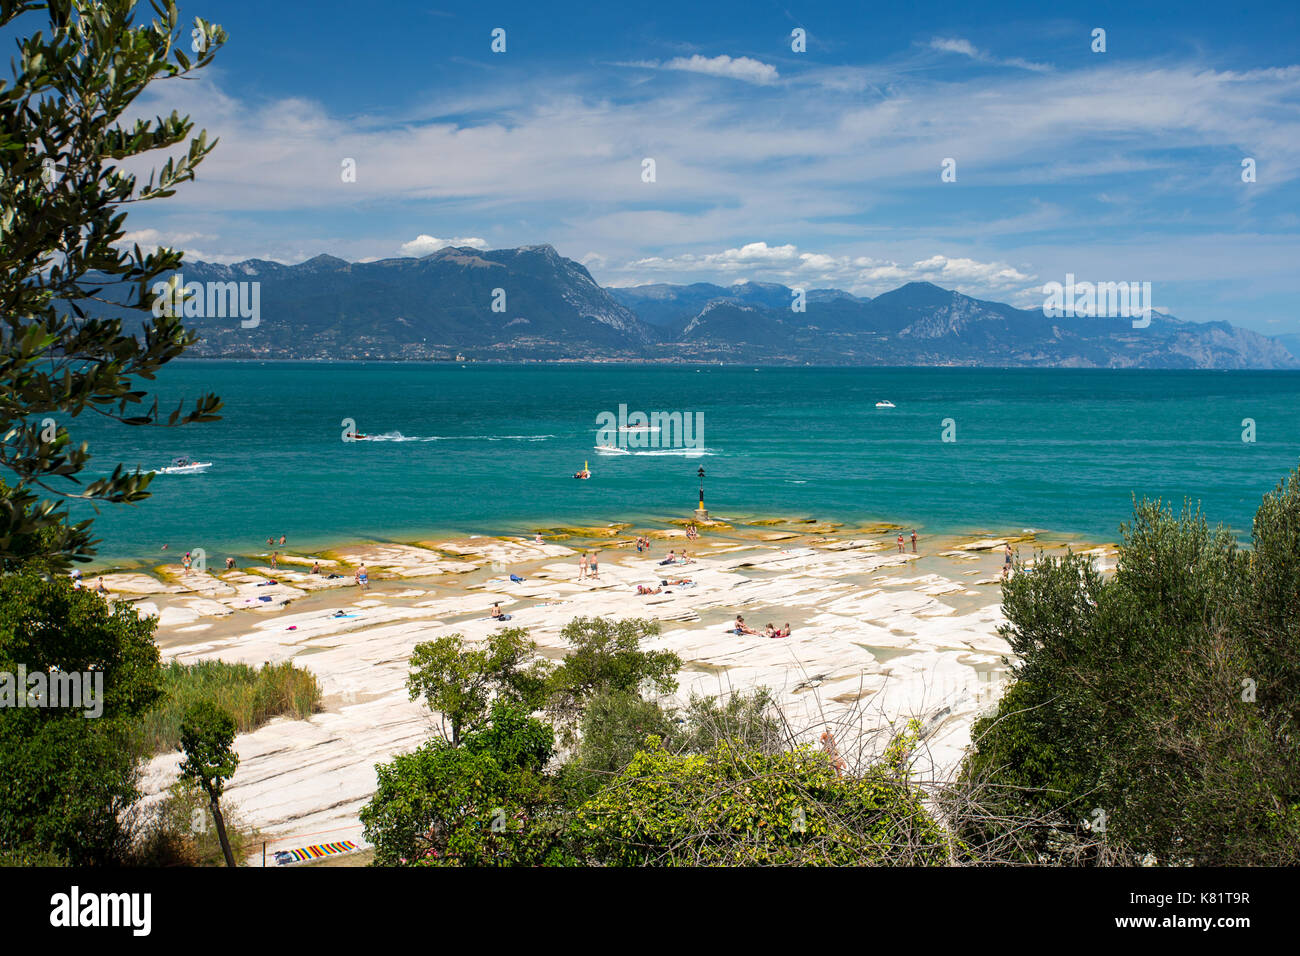 Jamaica Beach at the tip of Sirmione, Lake Garda, Italy Stock Photo